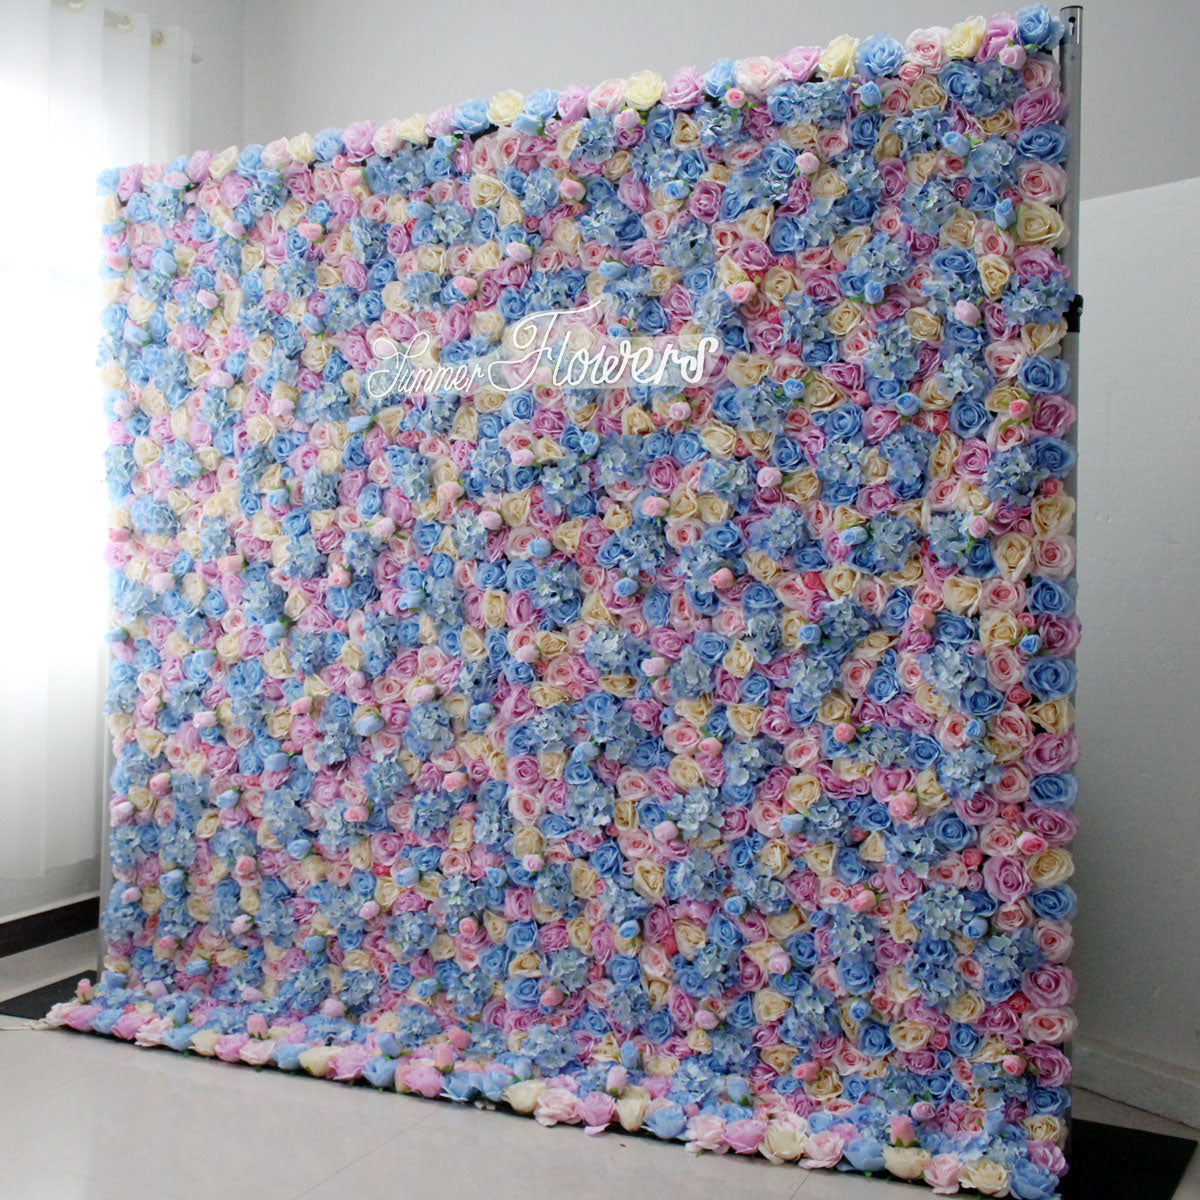 Summer Flower:CB-179 8ft*8ft Cloth Back Artificial Flower Wall Backdrop